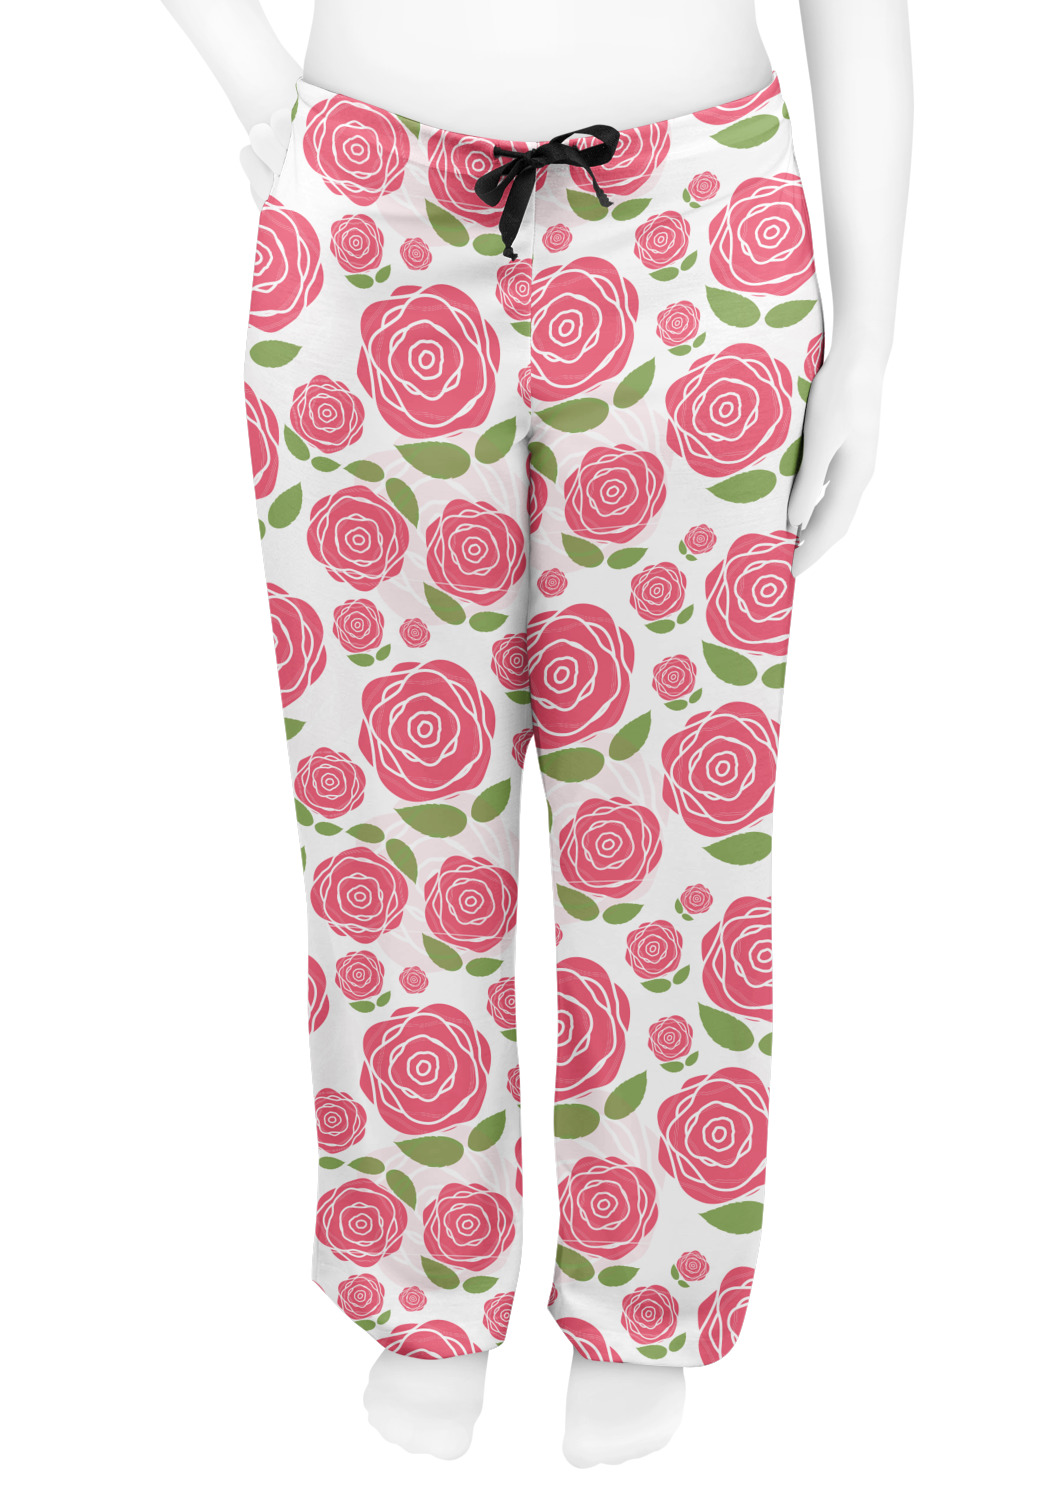 Roses Womens Pajama Pants (Personalized)